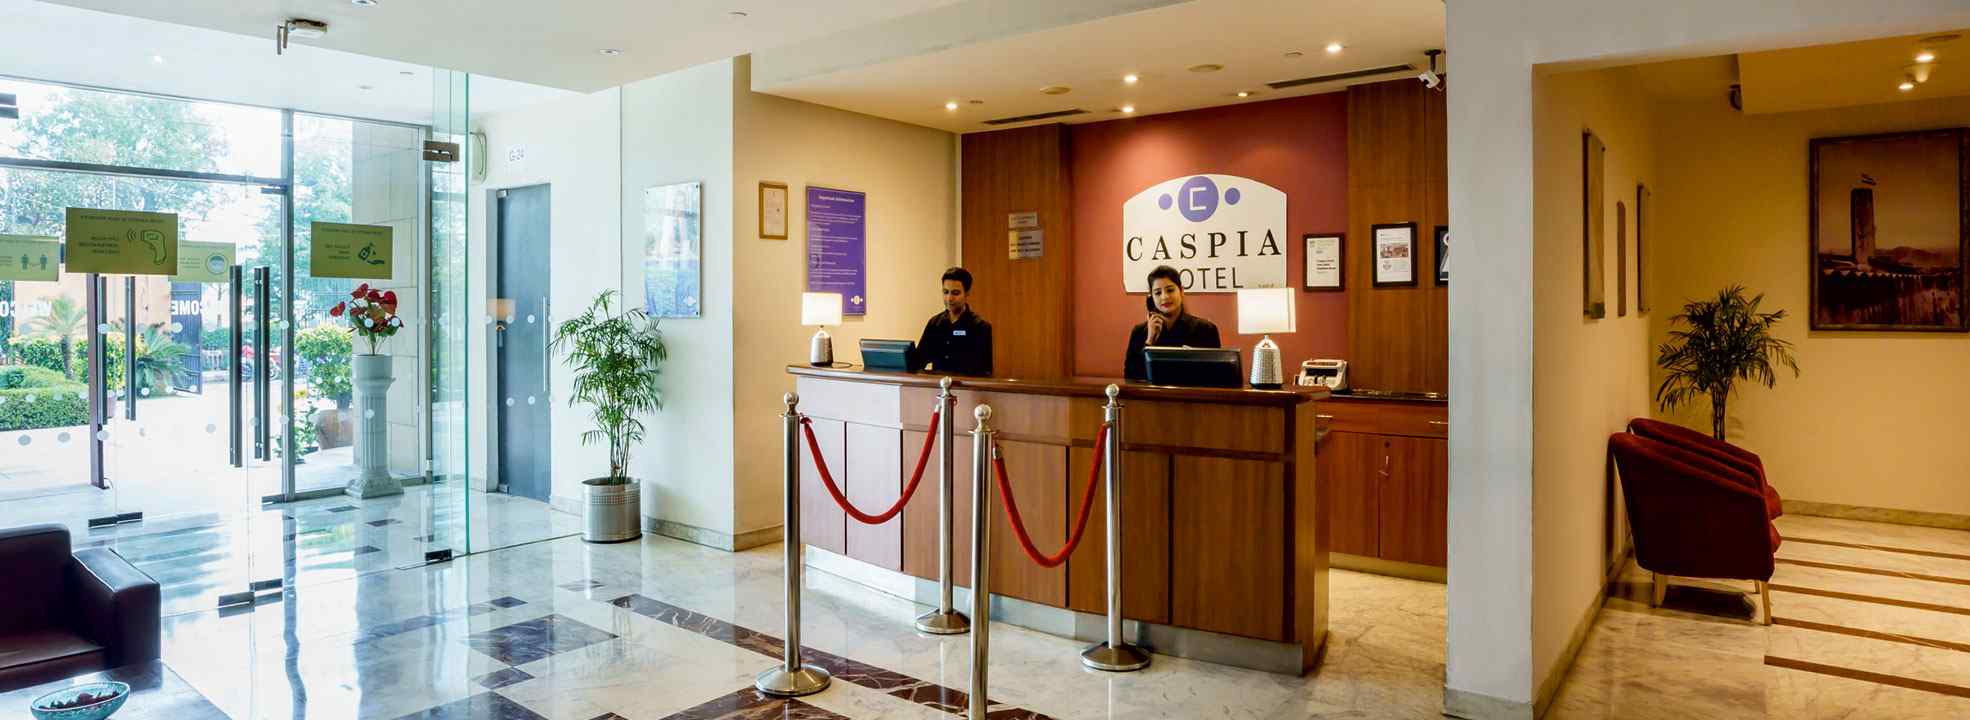 Caspia-banner